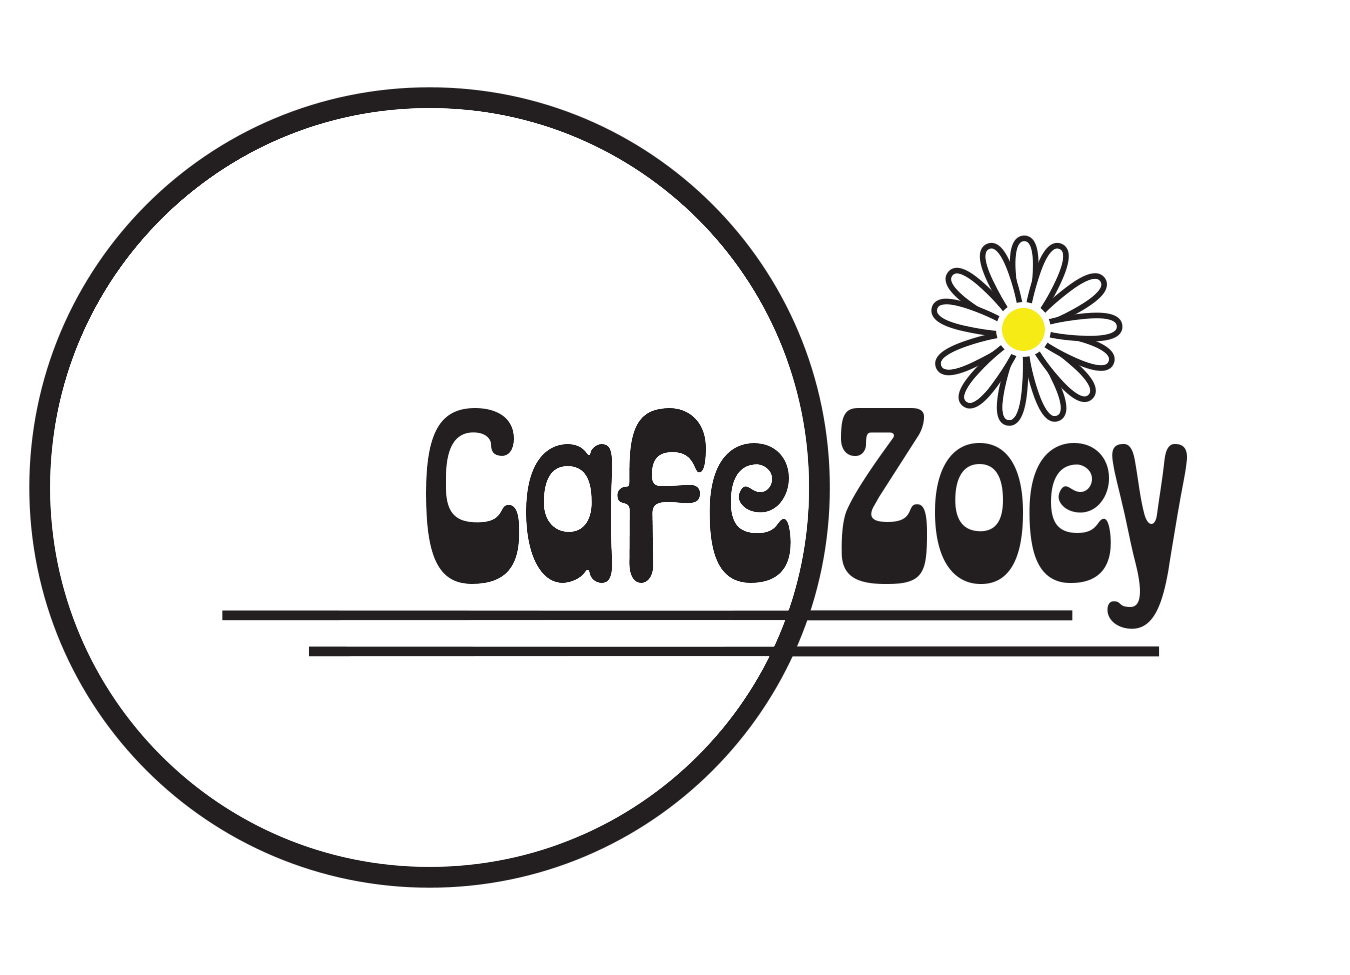 Café Zoey